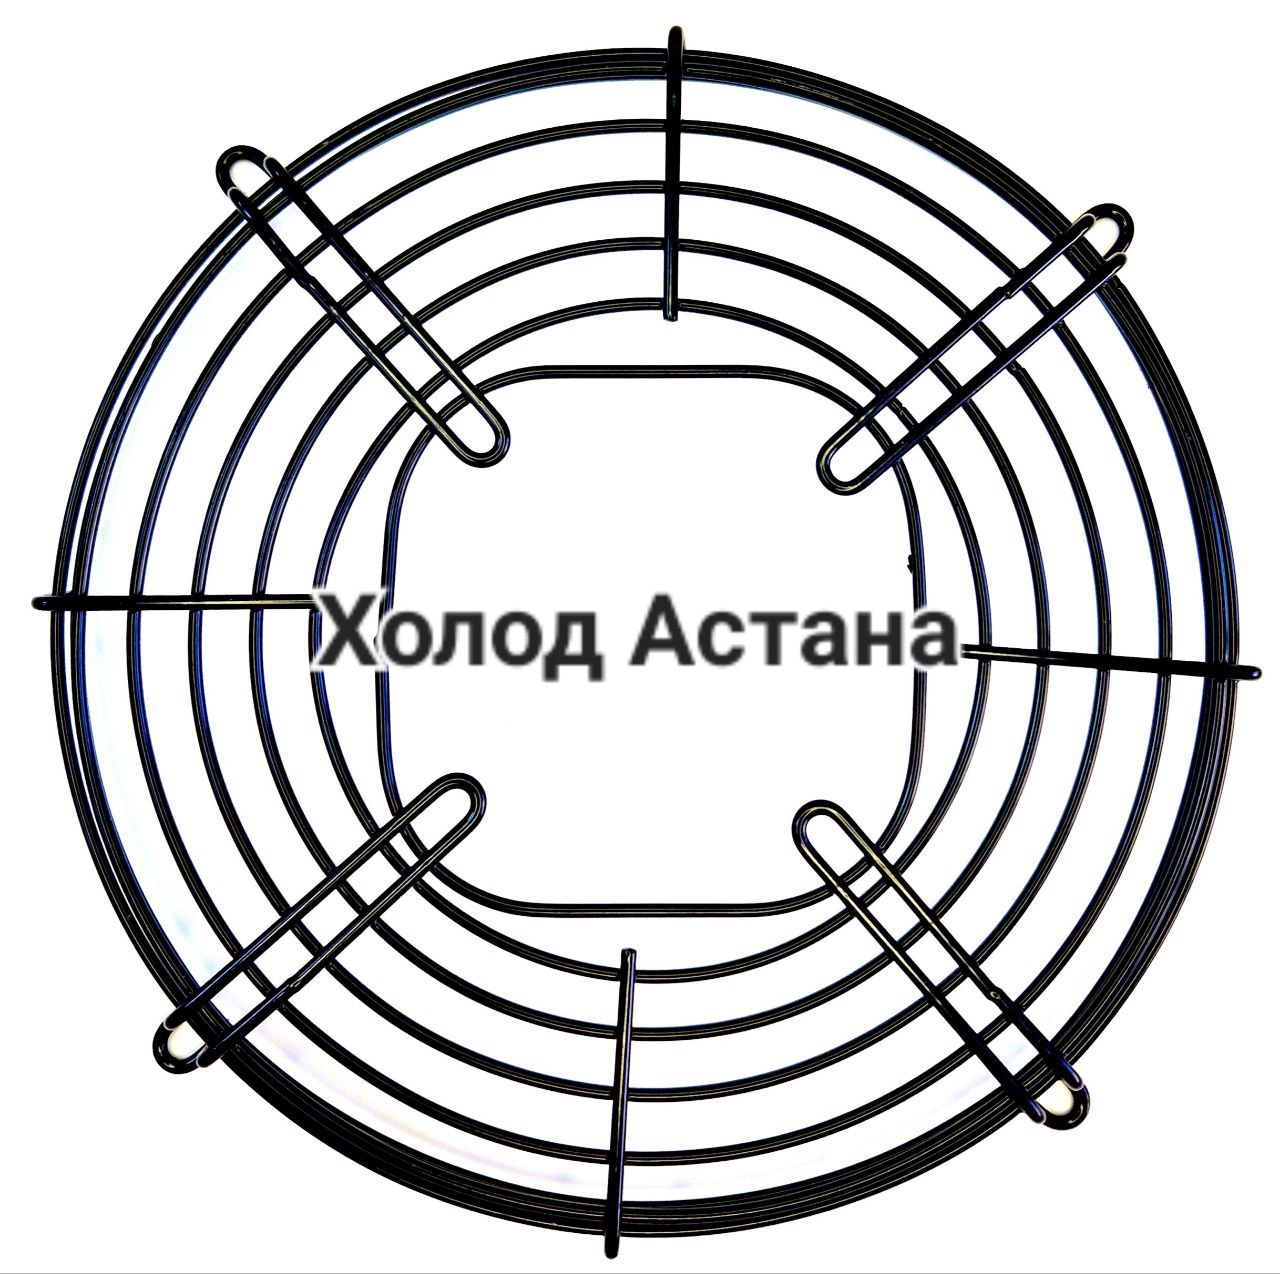  вентилятора R22 | Холод Астана